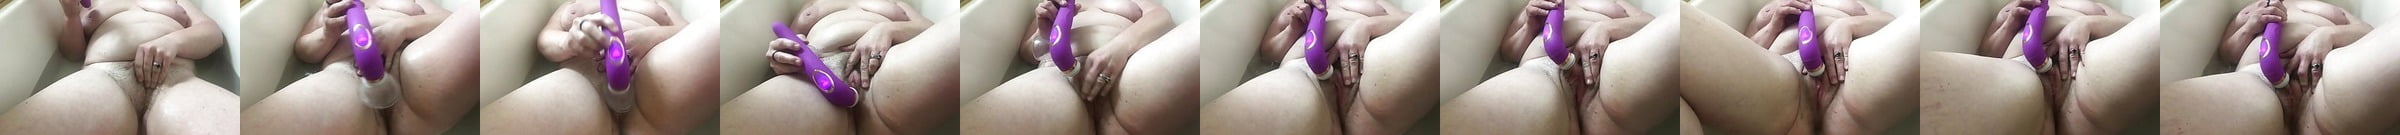 Sexycurvyjuicy Porn Creator Videos Free Amateur Nudes Xhamster